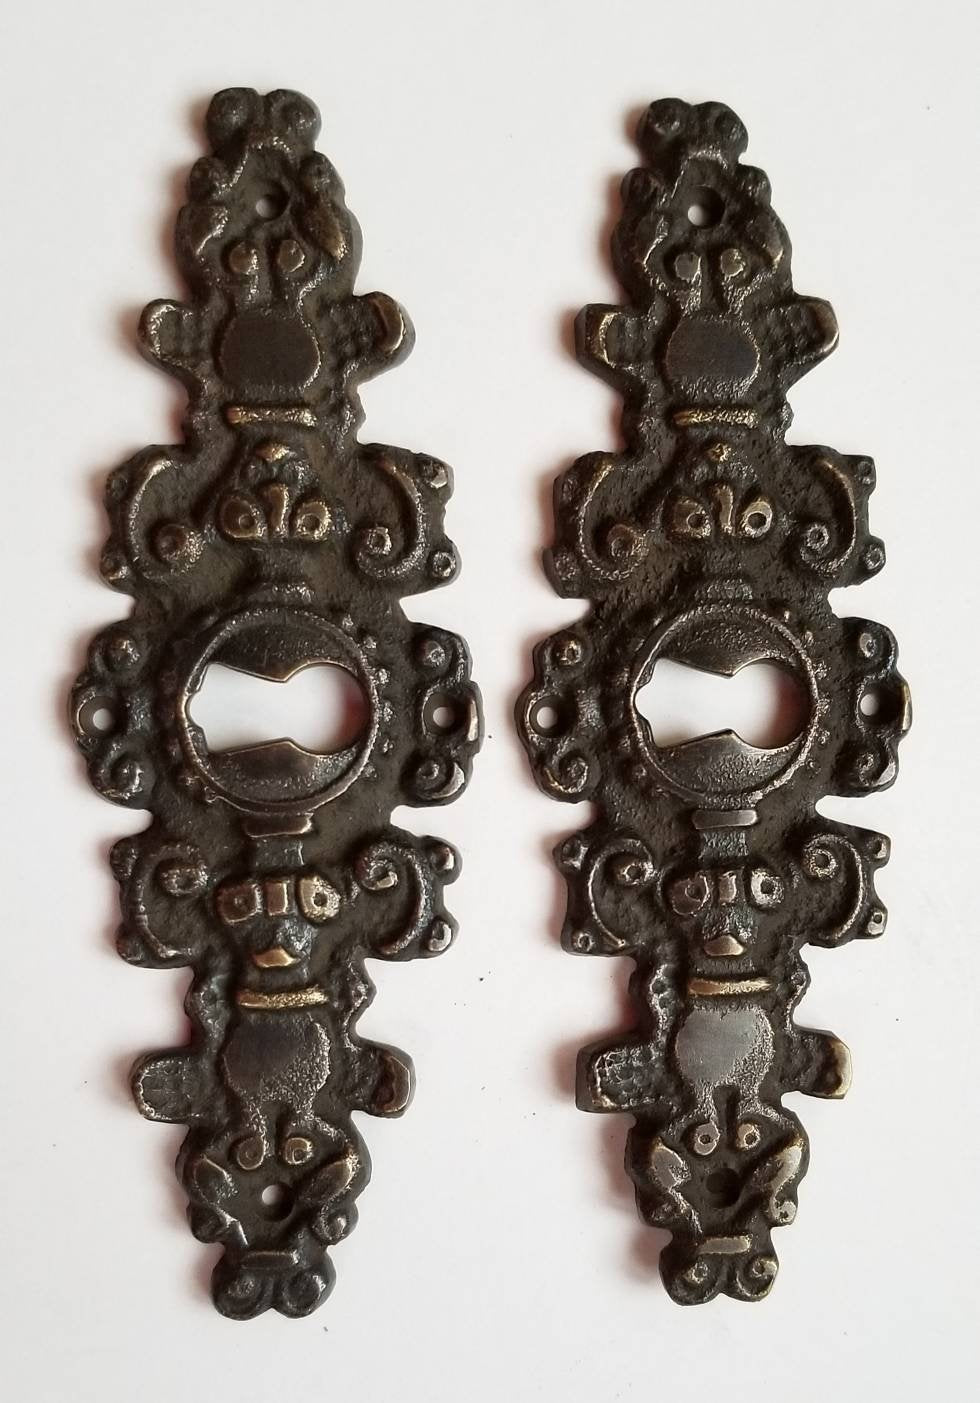 2 Antique French Brass Escutcheon, Hardware Ornate Keyhole Cover,approx. 4-1/4" x 1-3/8" #E8